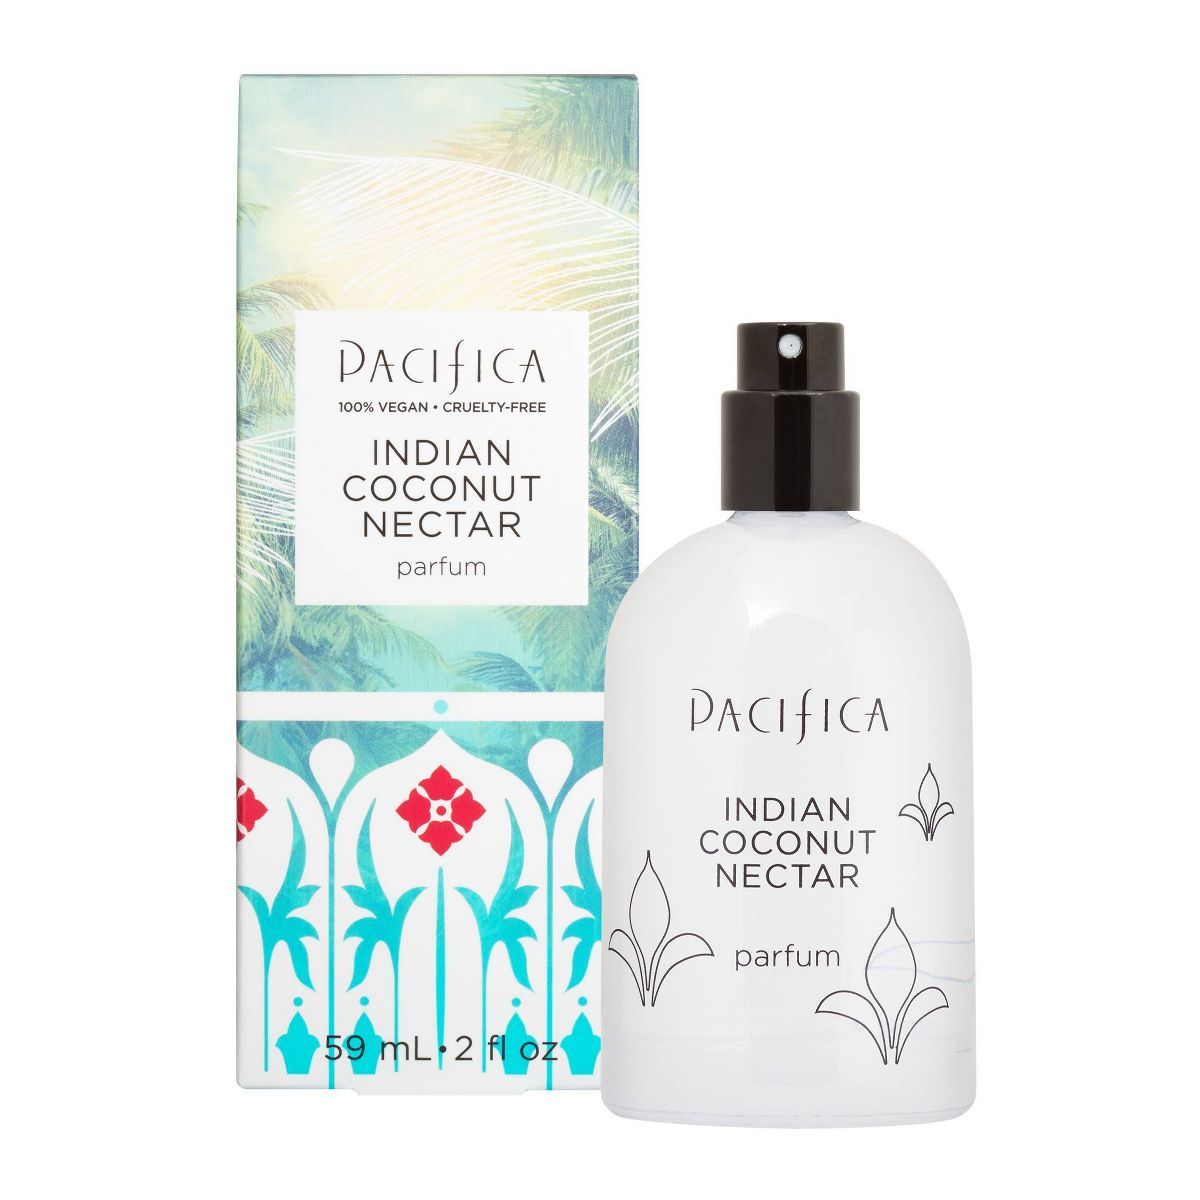 Pacifica Indian Coconut Nectar Spray Perfume - 2 fl oz | Target